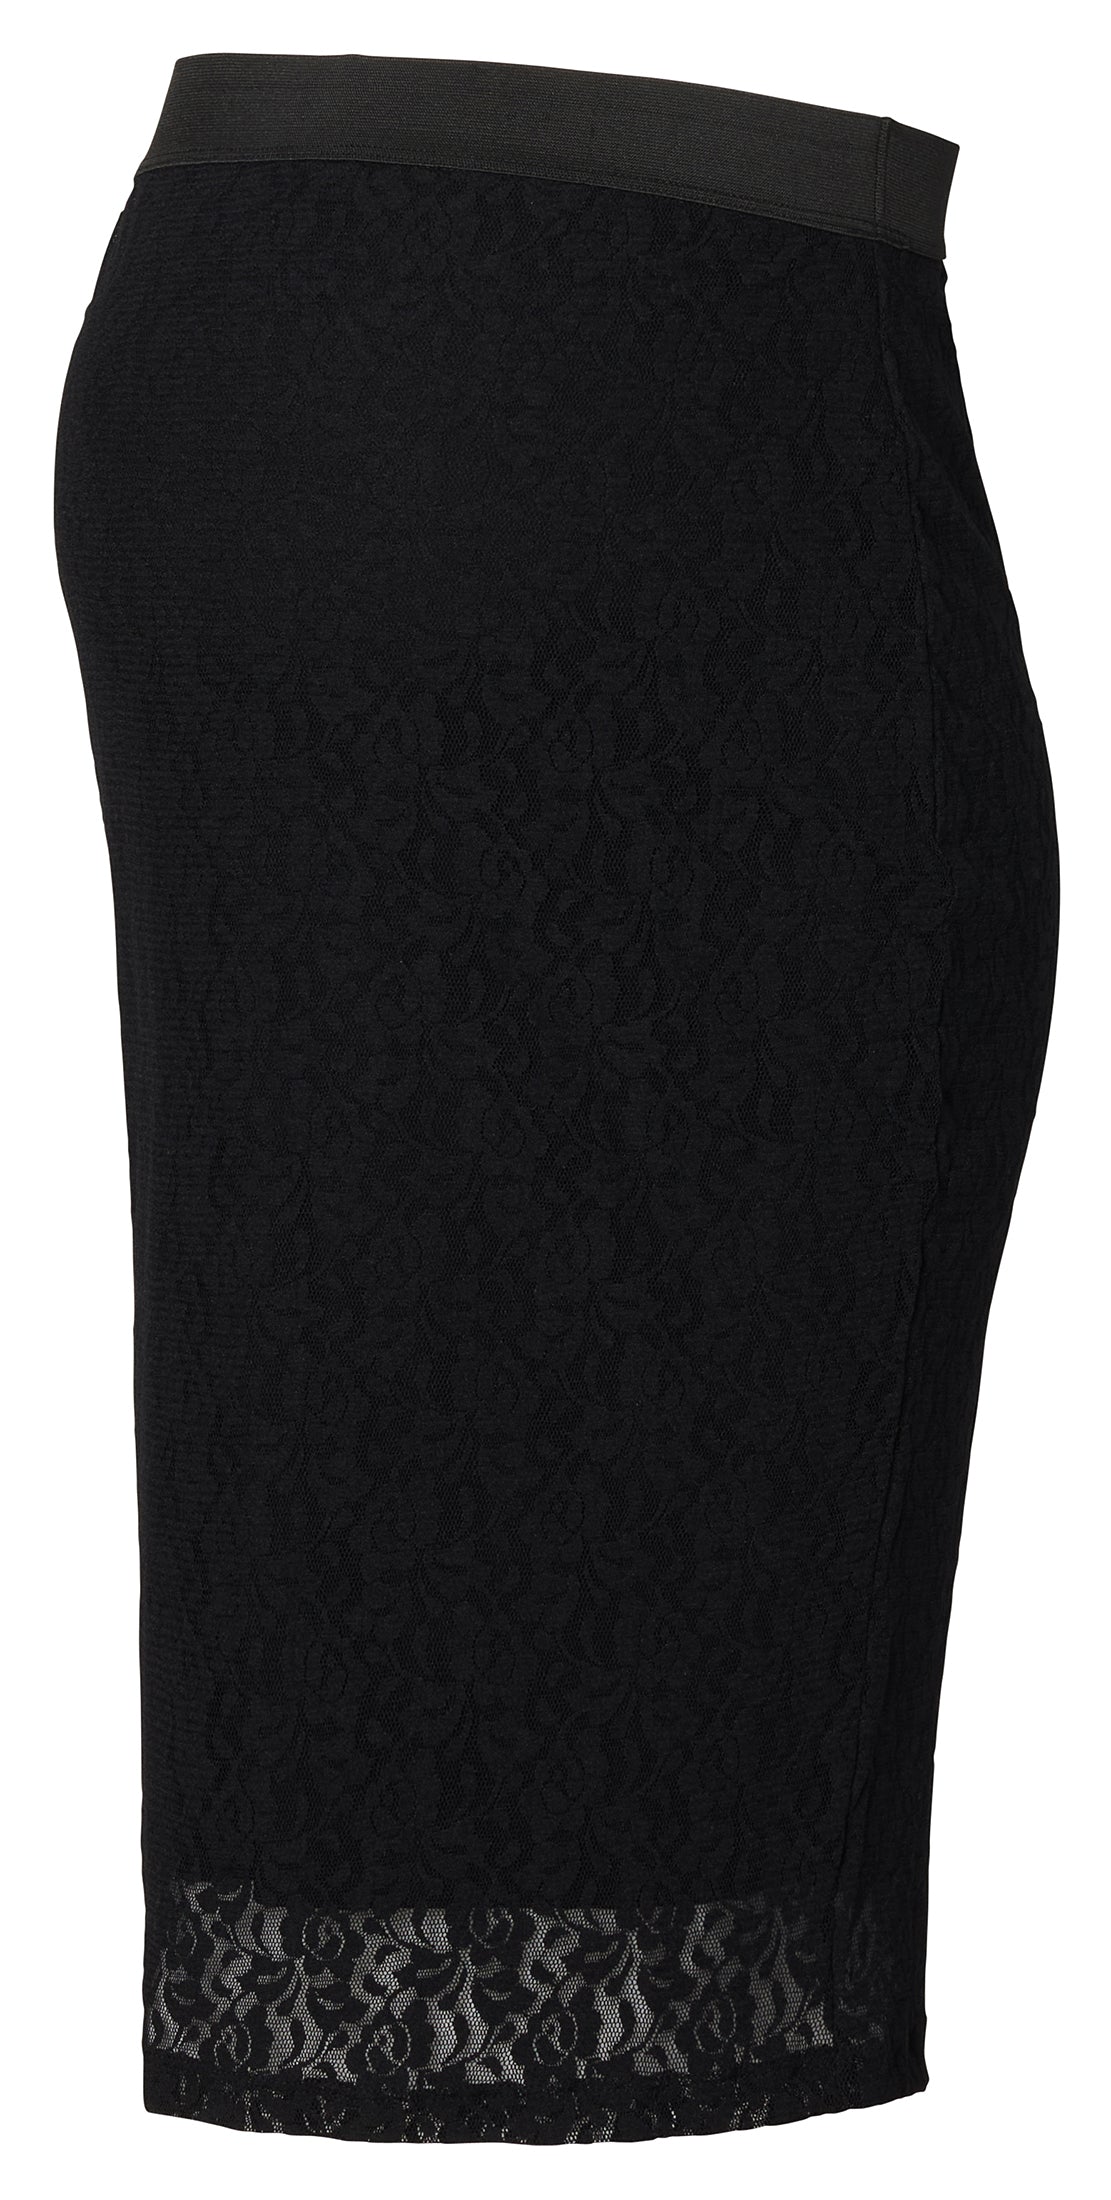 Lace skirt - Black